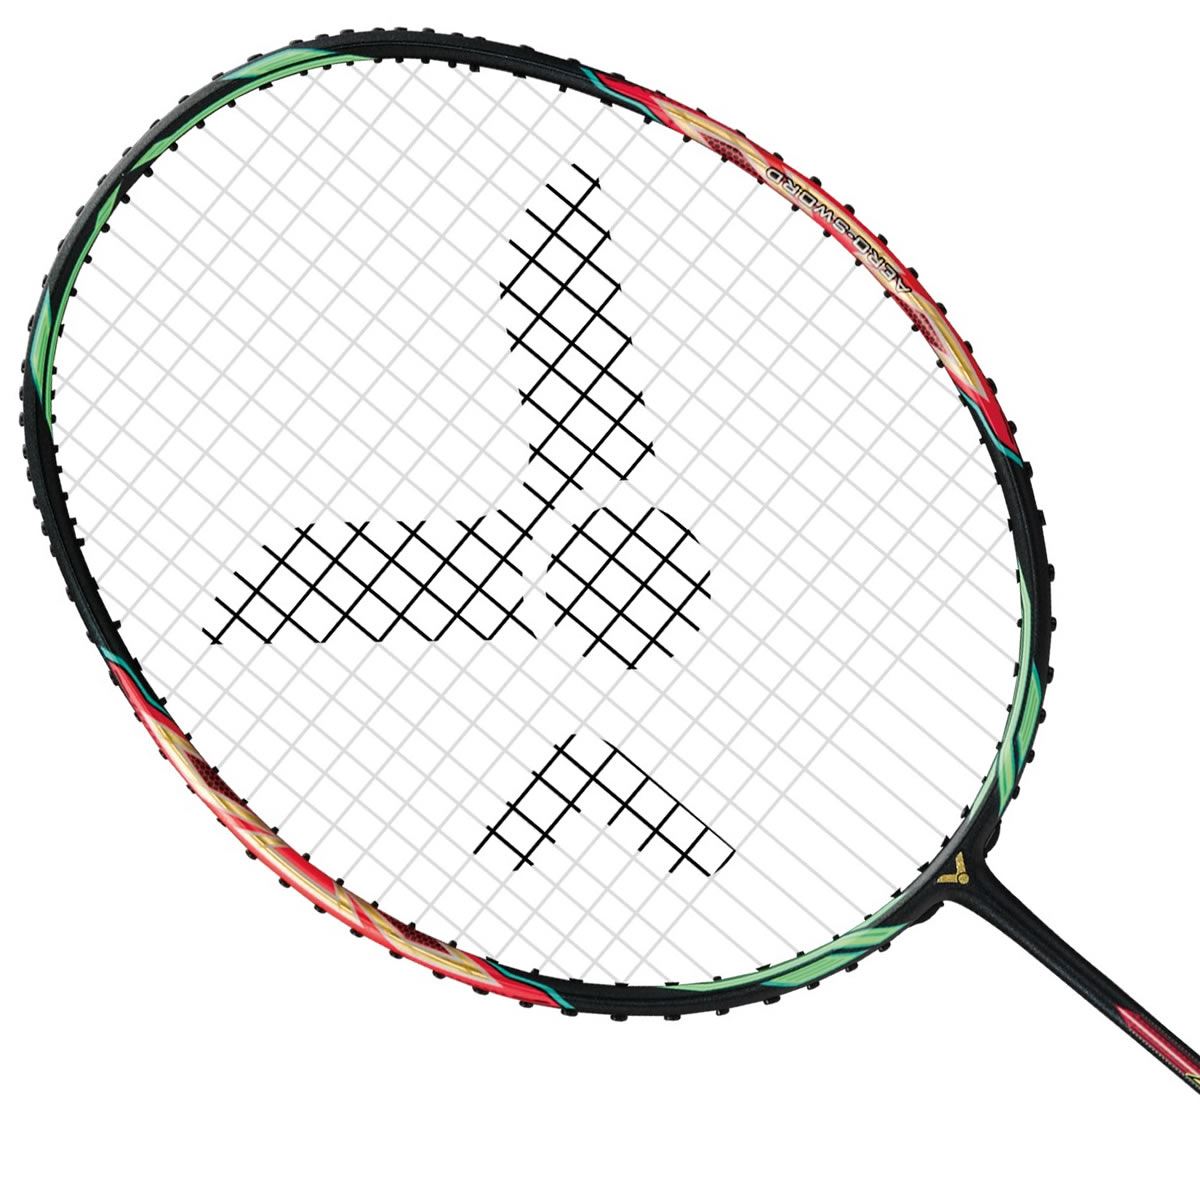 Victor Jetspeed S 10 Q Badminton Racket - Red Black - Professional ...